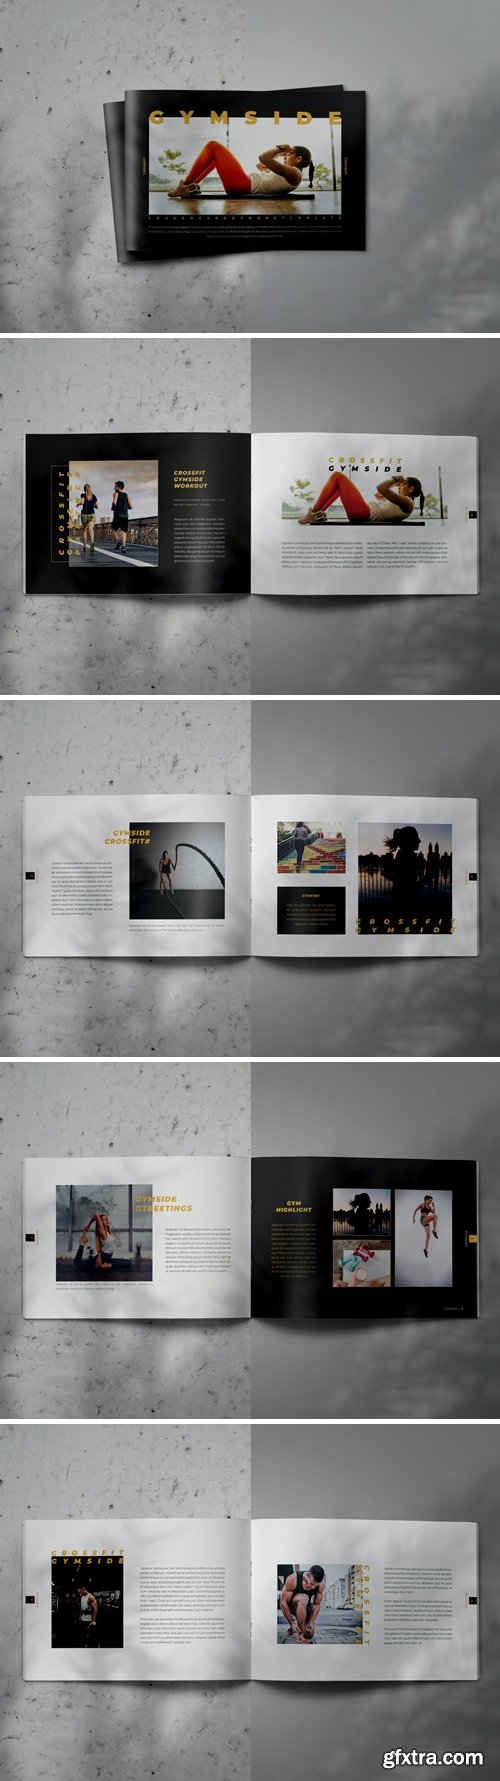 GYMSIDE - Indesign Lookbook Brochure Template